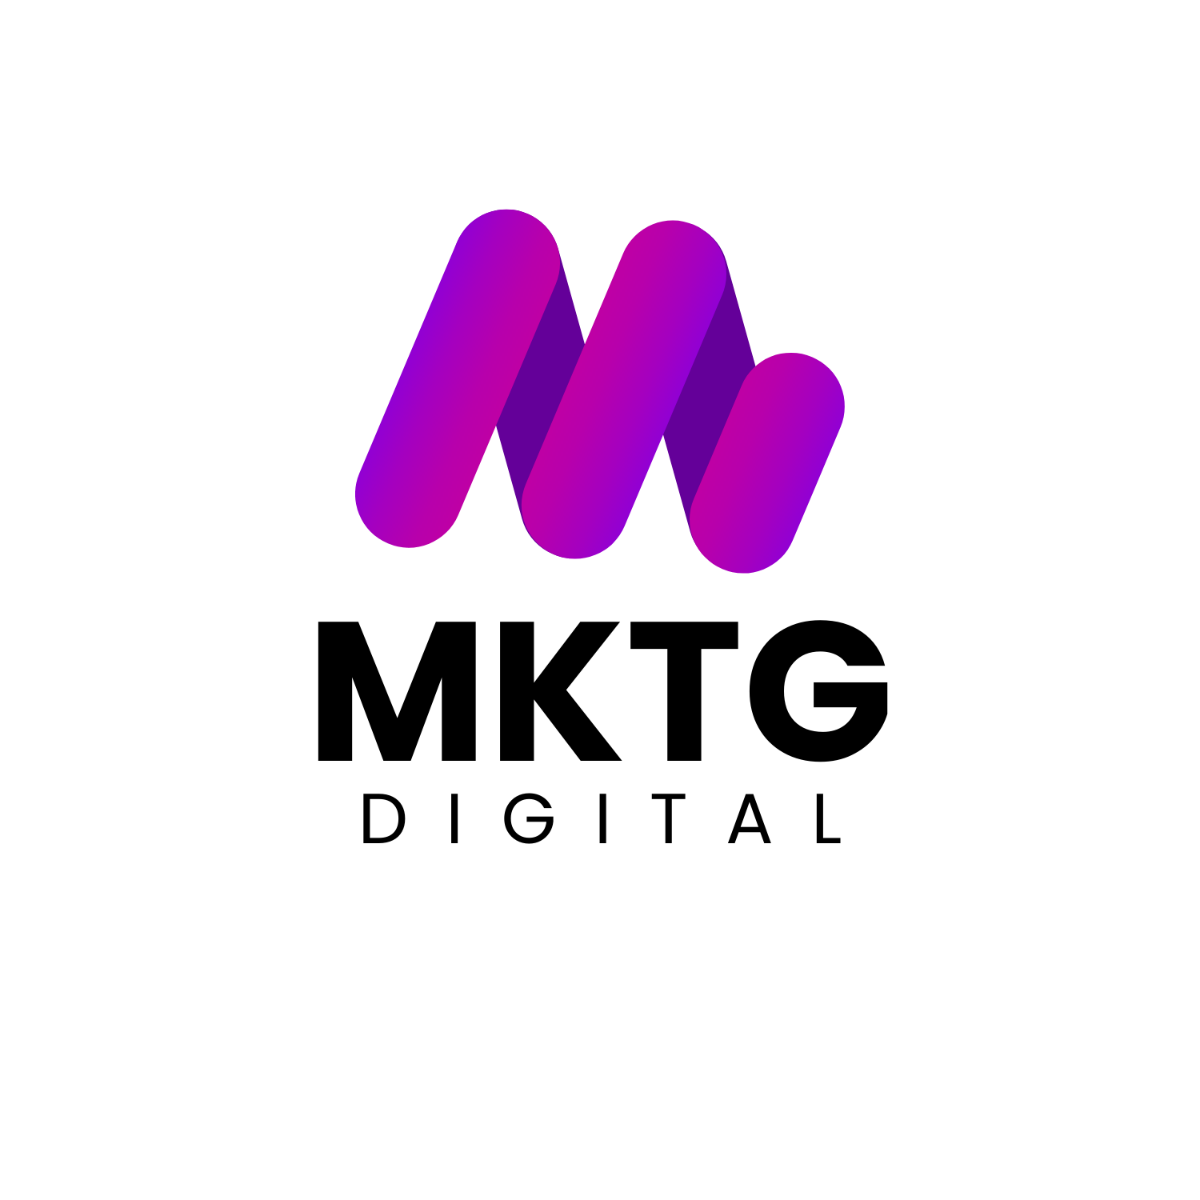 Digital Marketing Agency Primary Logo